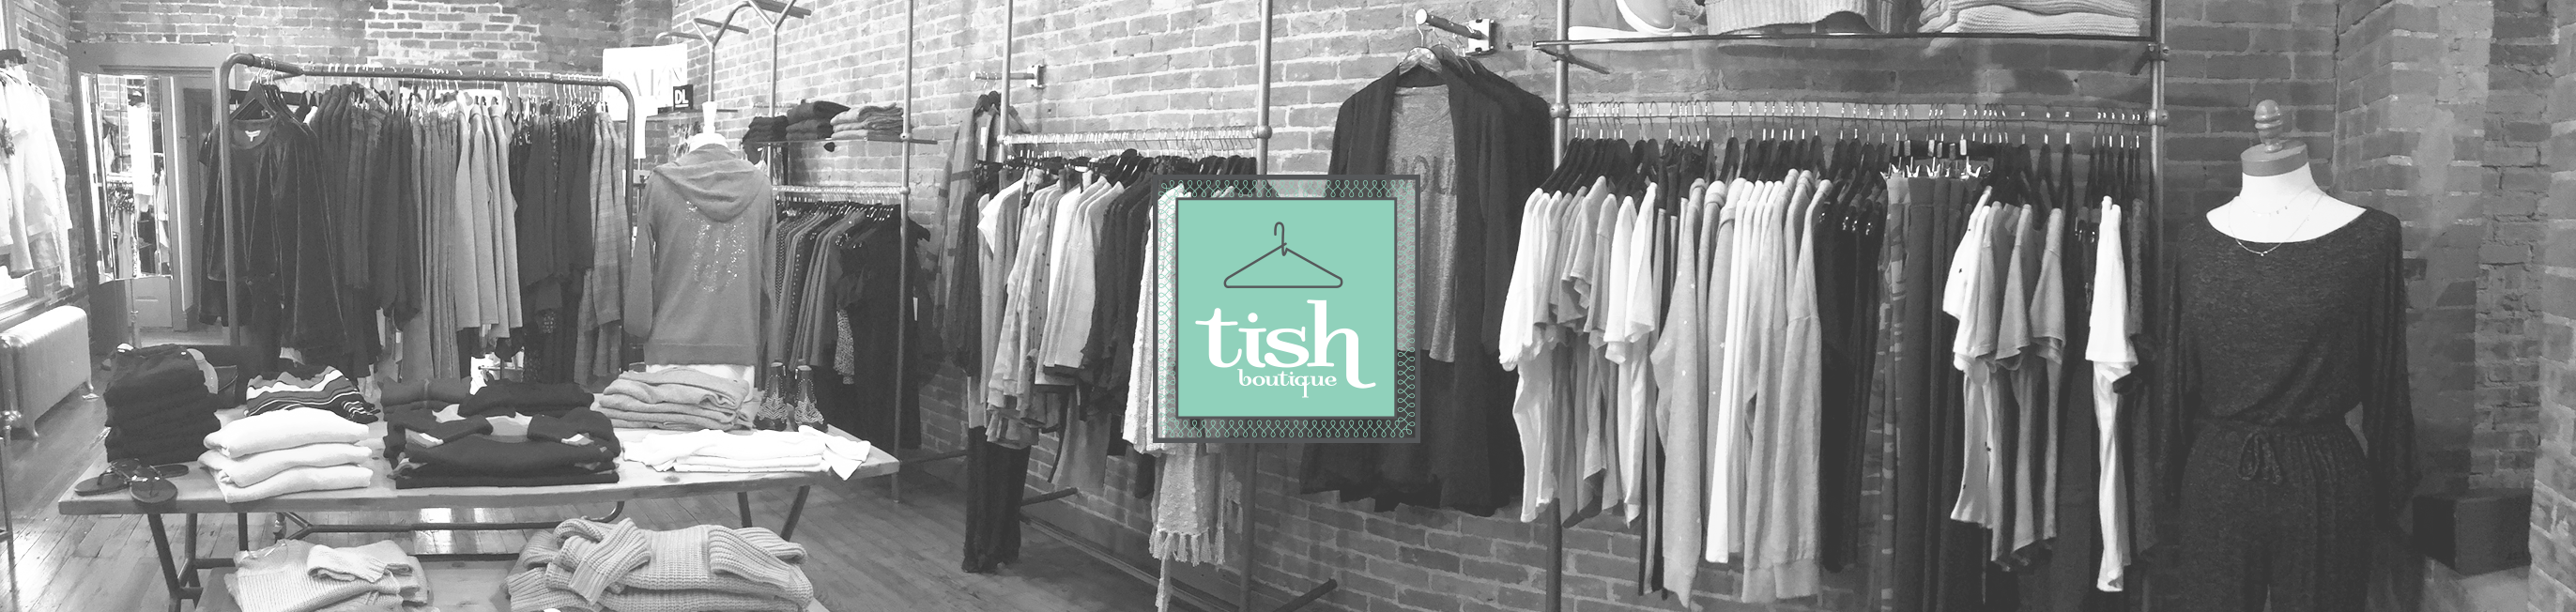 Tish Boutique Showroom